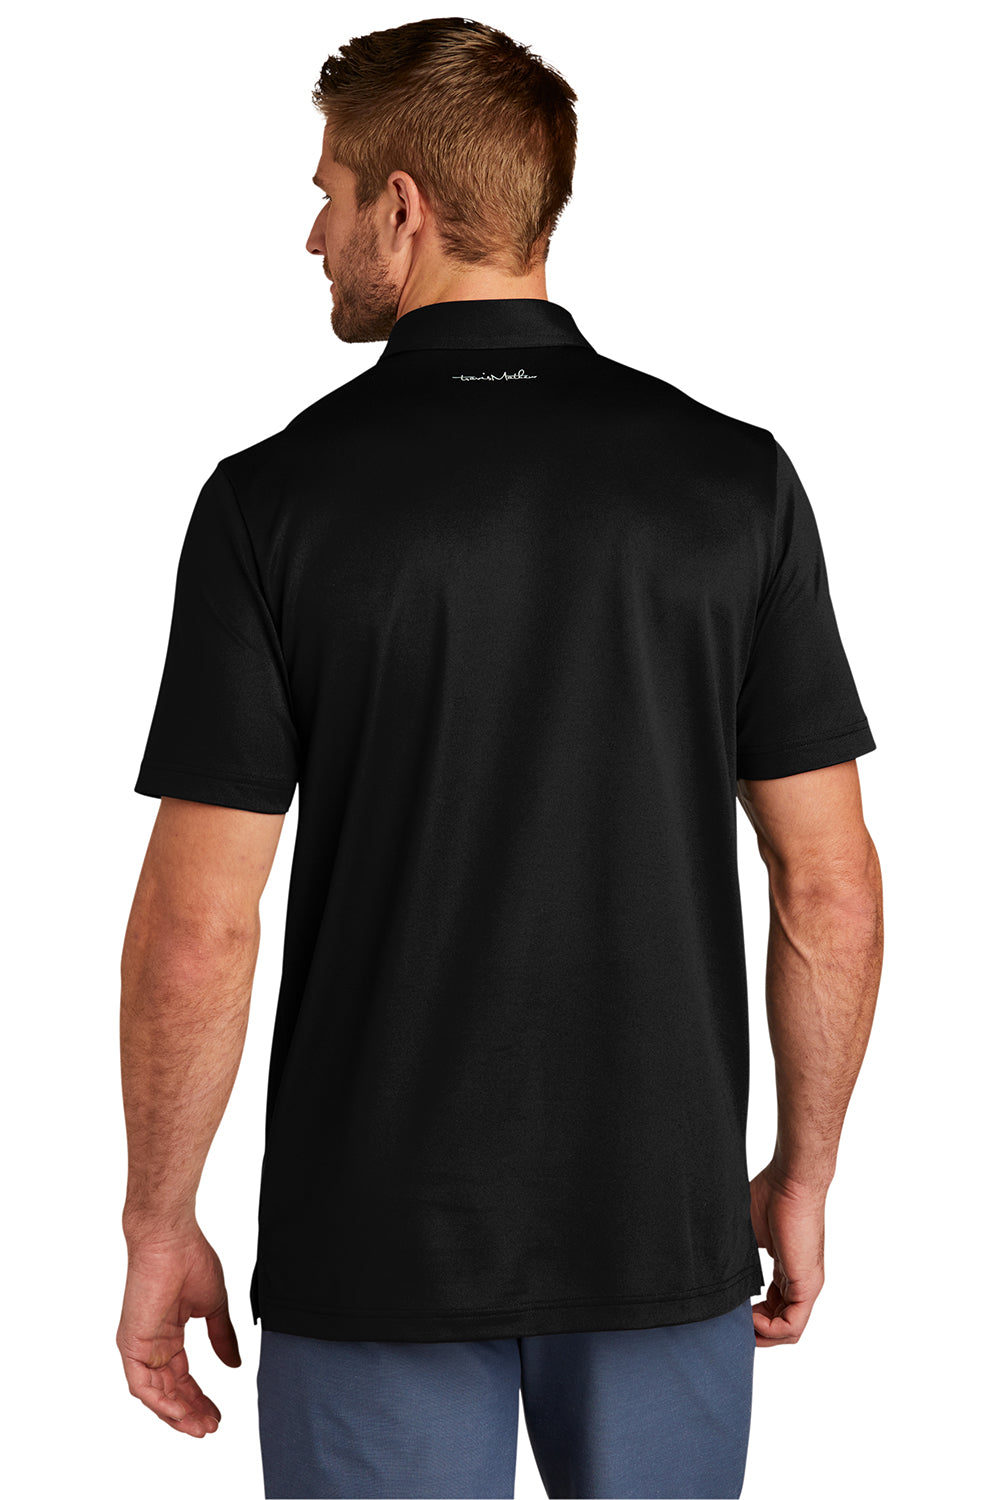 TravisMathew TM1MU416 Mens Cabana Moisture Wicking Short Sleeve Polo Shirt Black Model Back